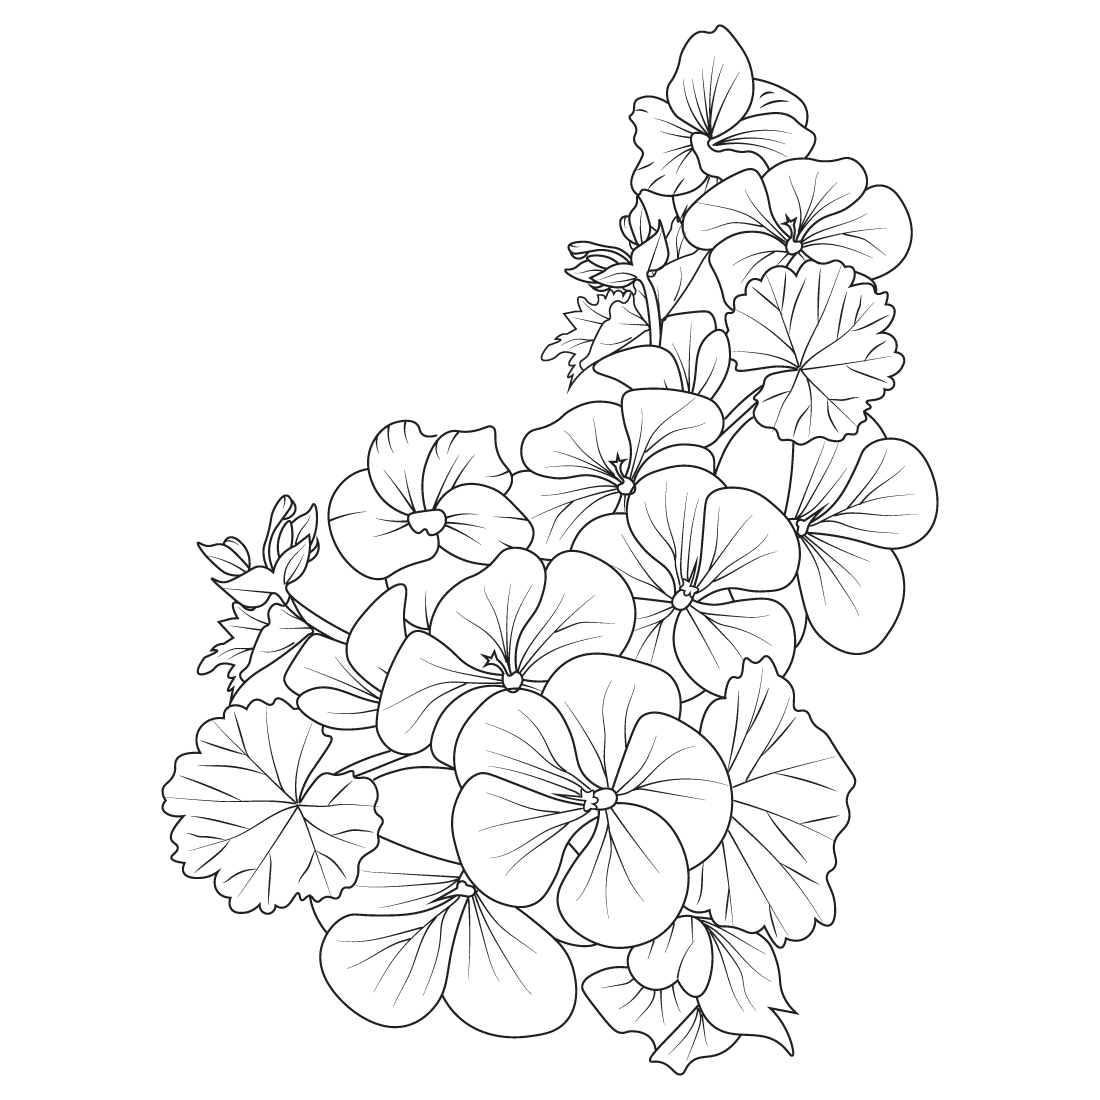 Geranium flower bouquet, pelargonium geranium, geranium drawing, geranium drawing easy, flower cluster drawing Easy flower coloring pages, Cute flower coloring pages, preview image.